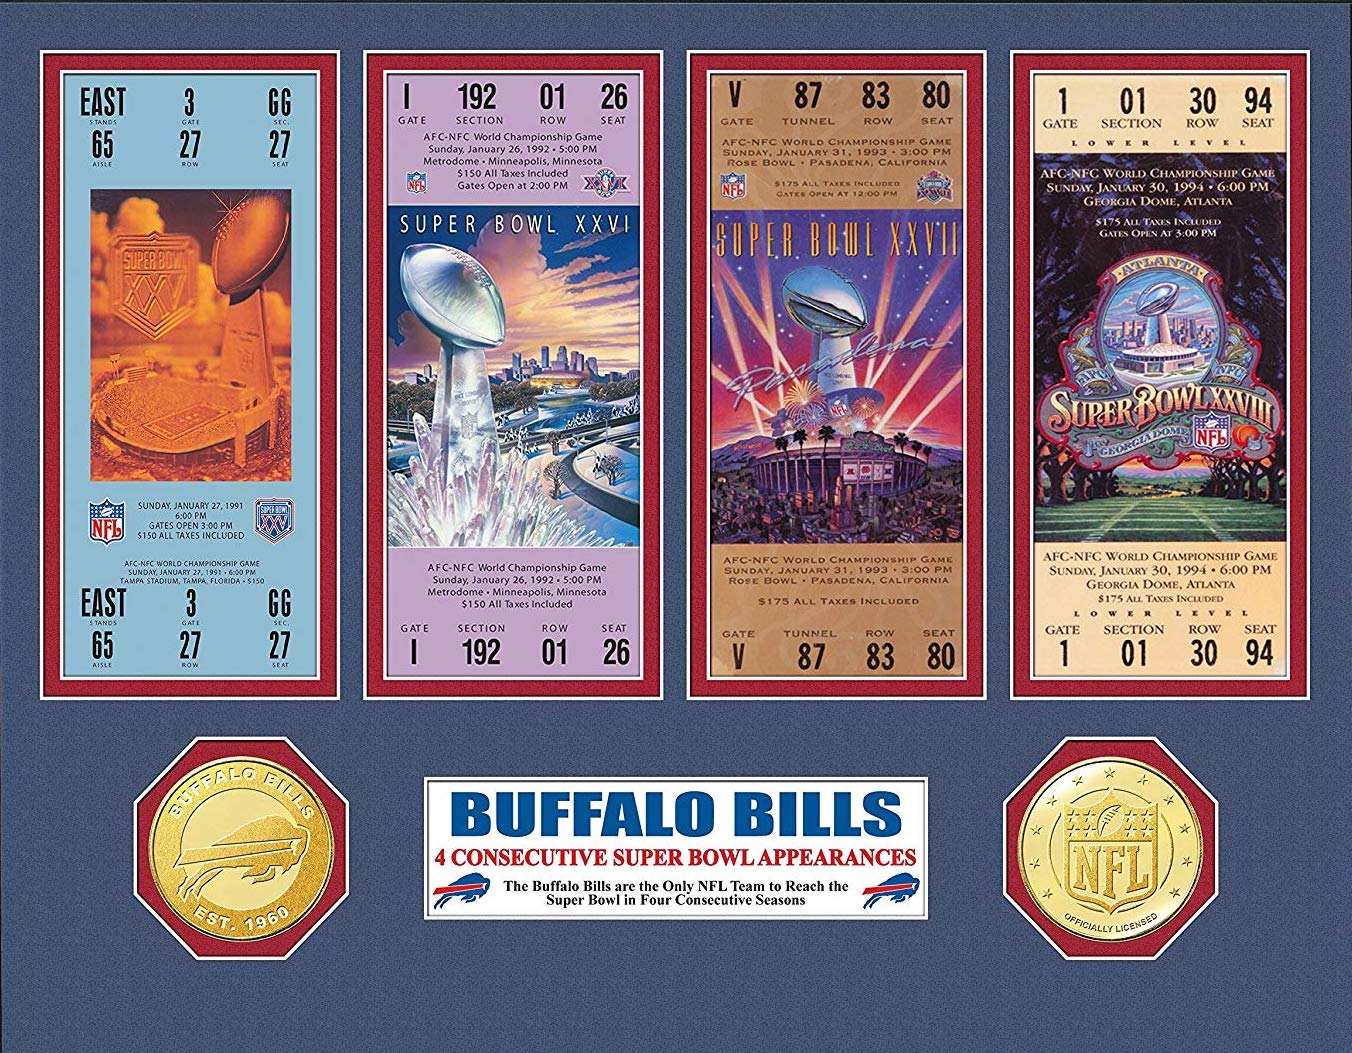 I 4 Super Bowl consecutivi persi dai Buffalo Bills